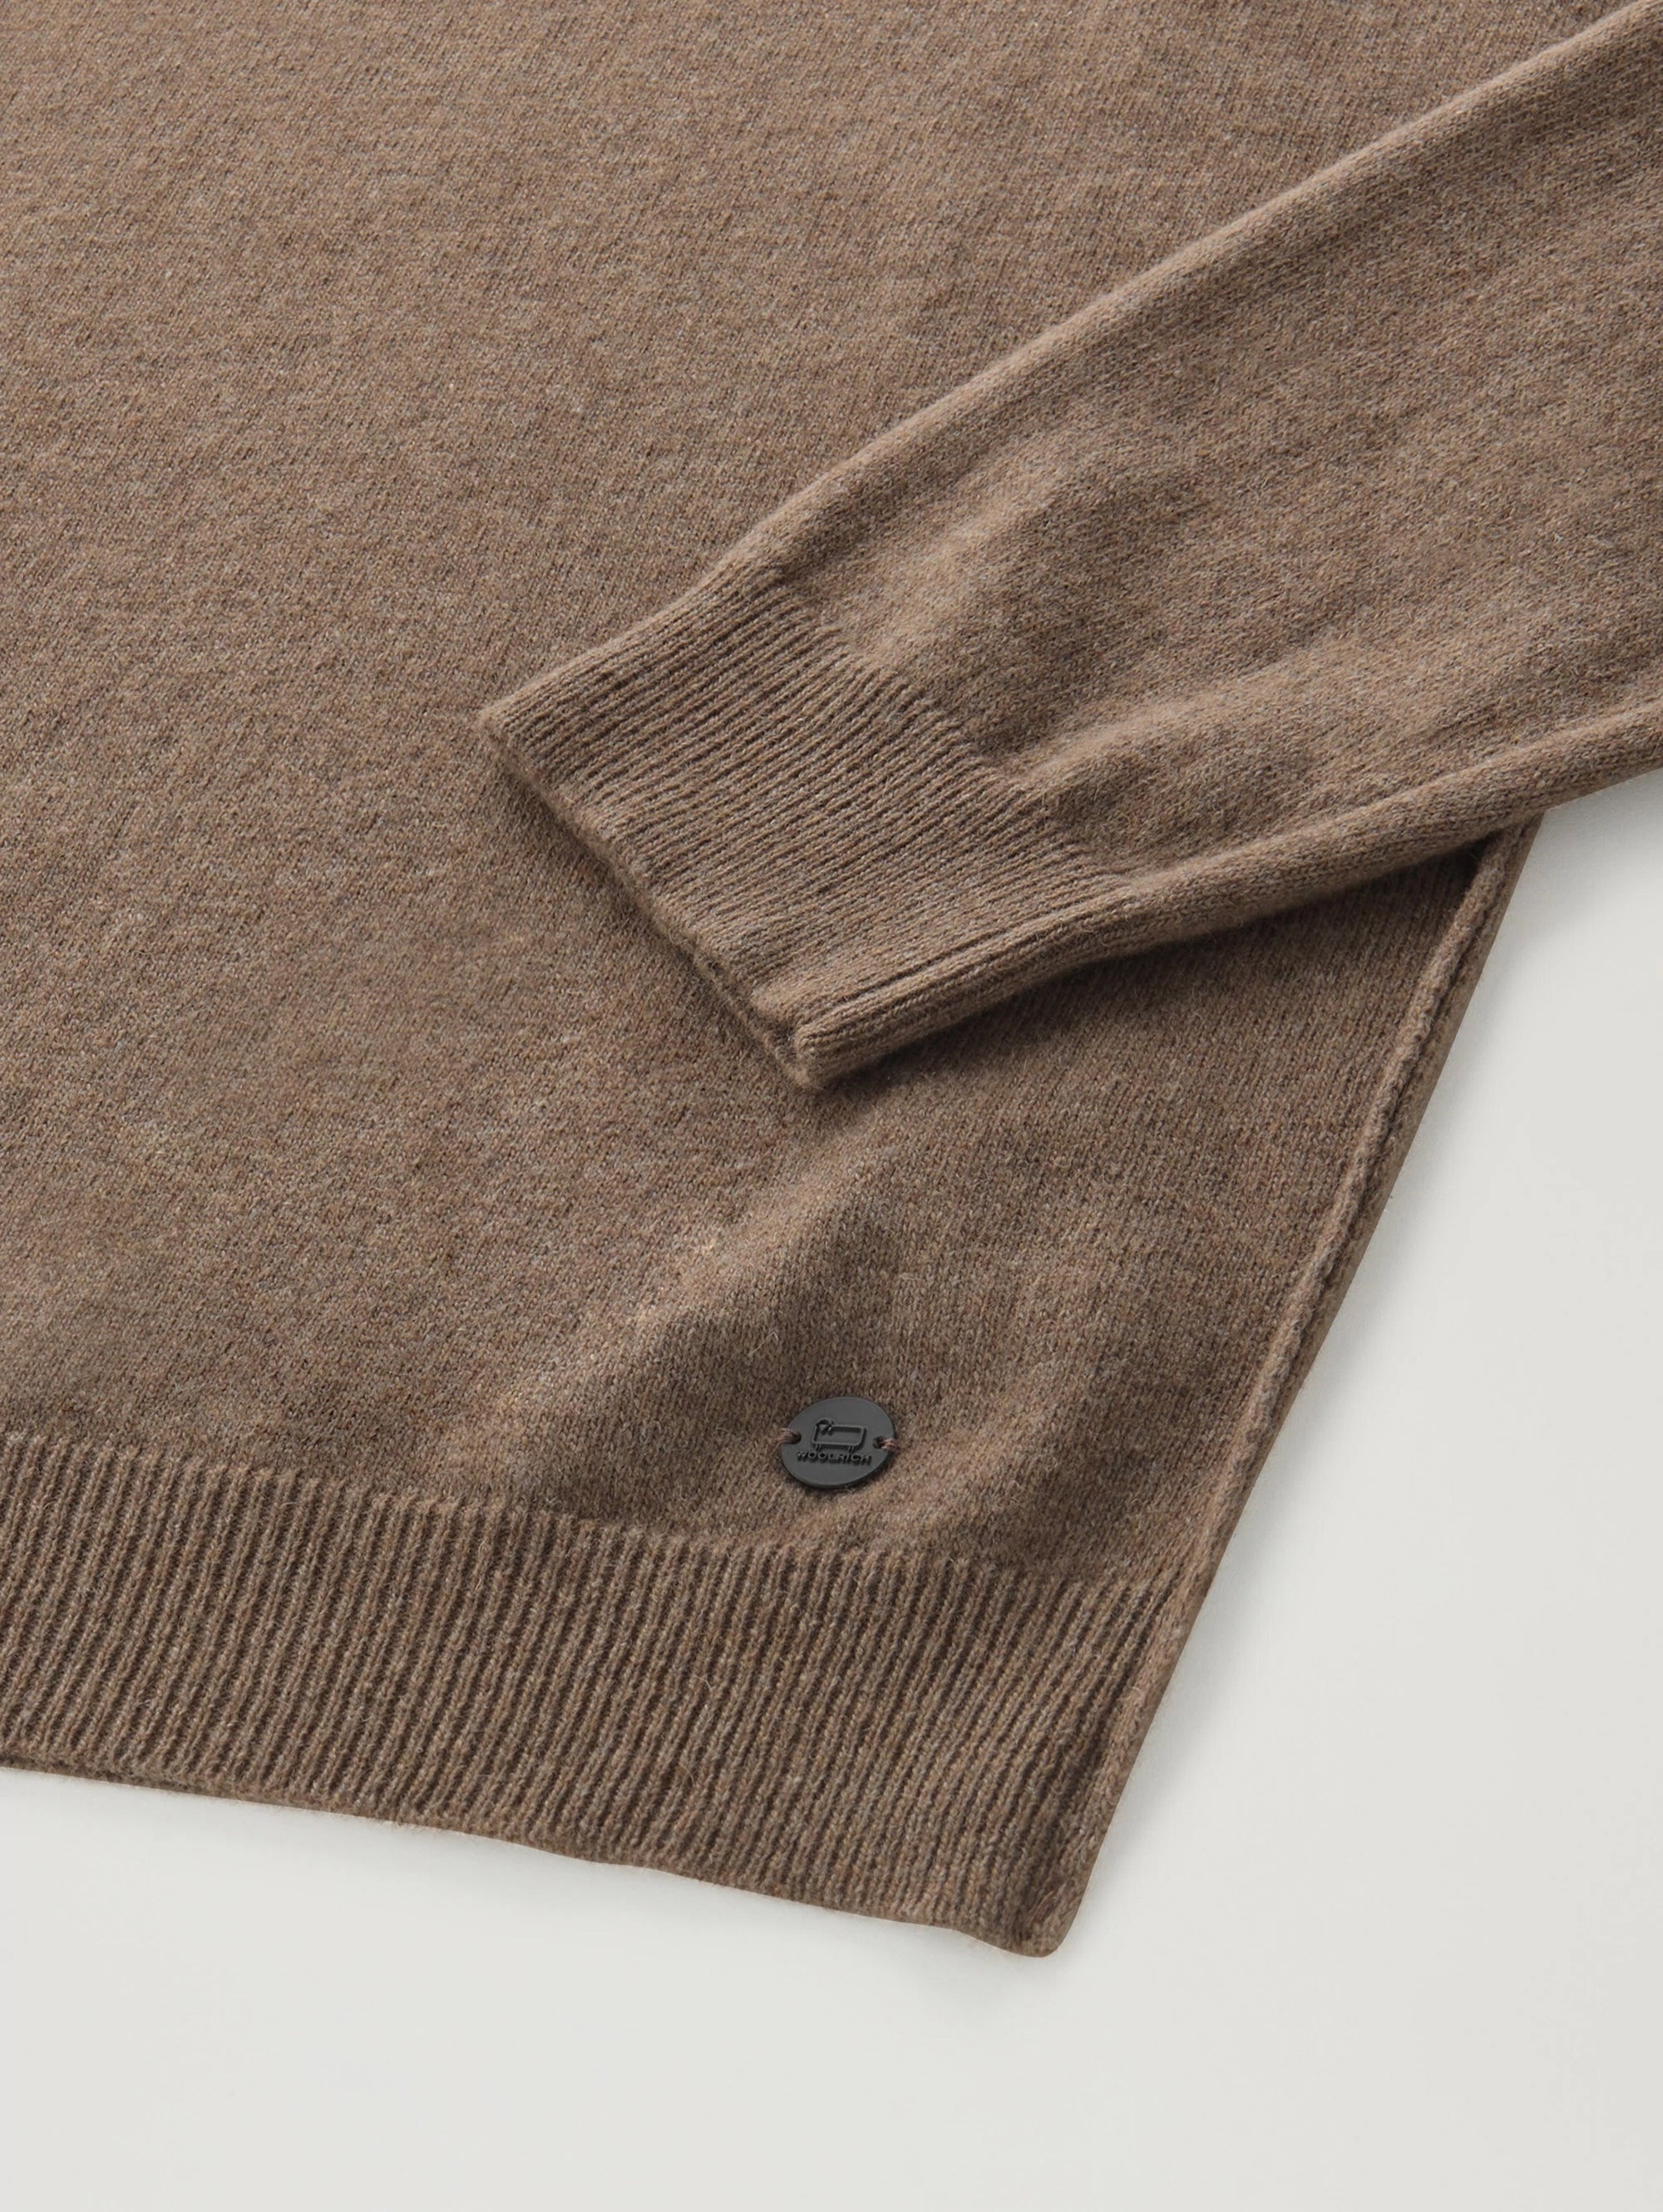 Crewneck sweater in dove-grey merino wool